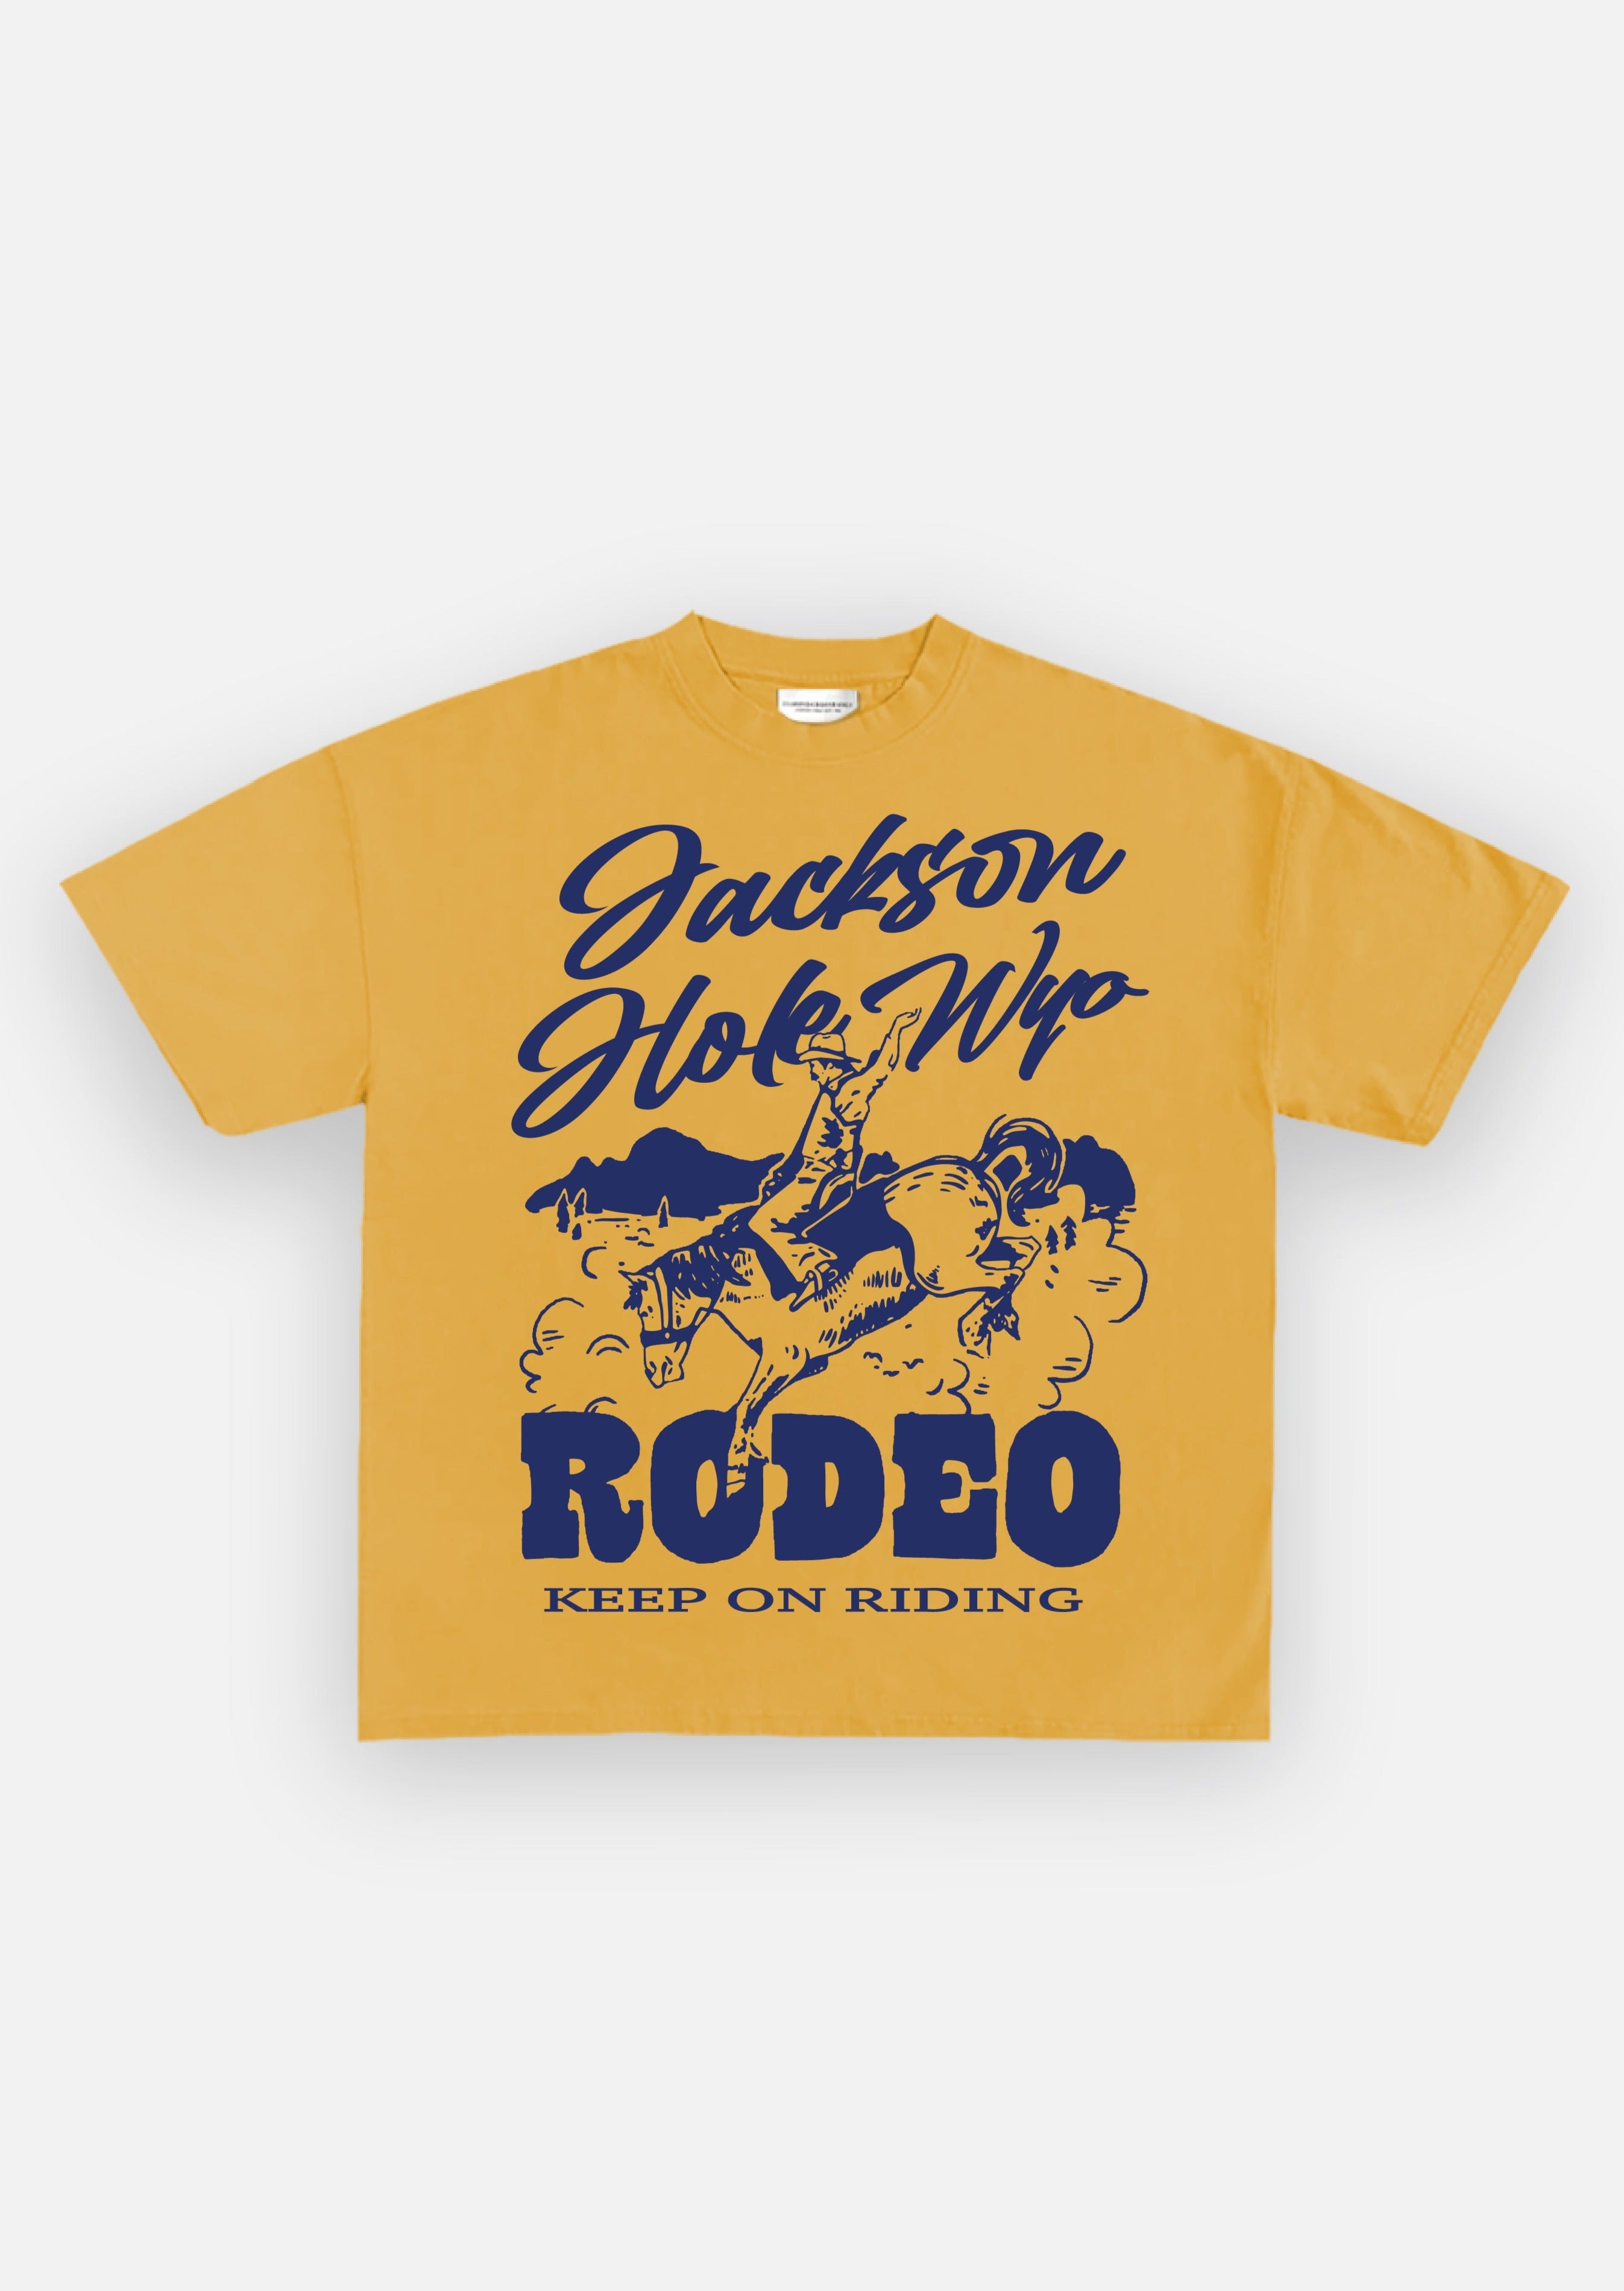 Mountain | Jackson Hole shirts | Wyoming – Diamond Cross Ranch